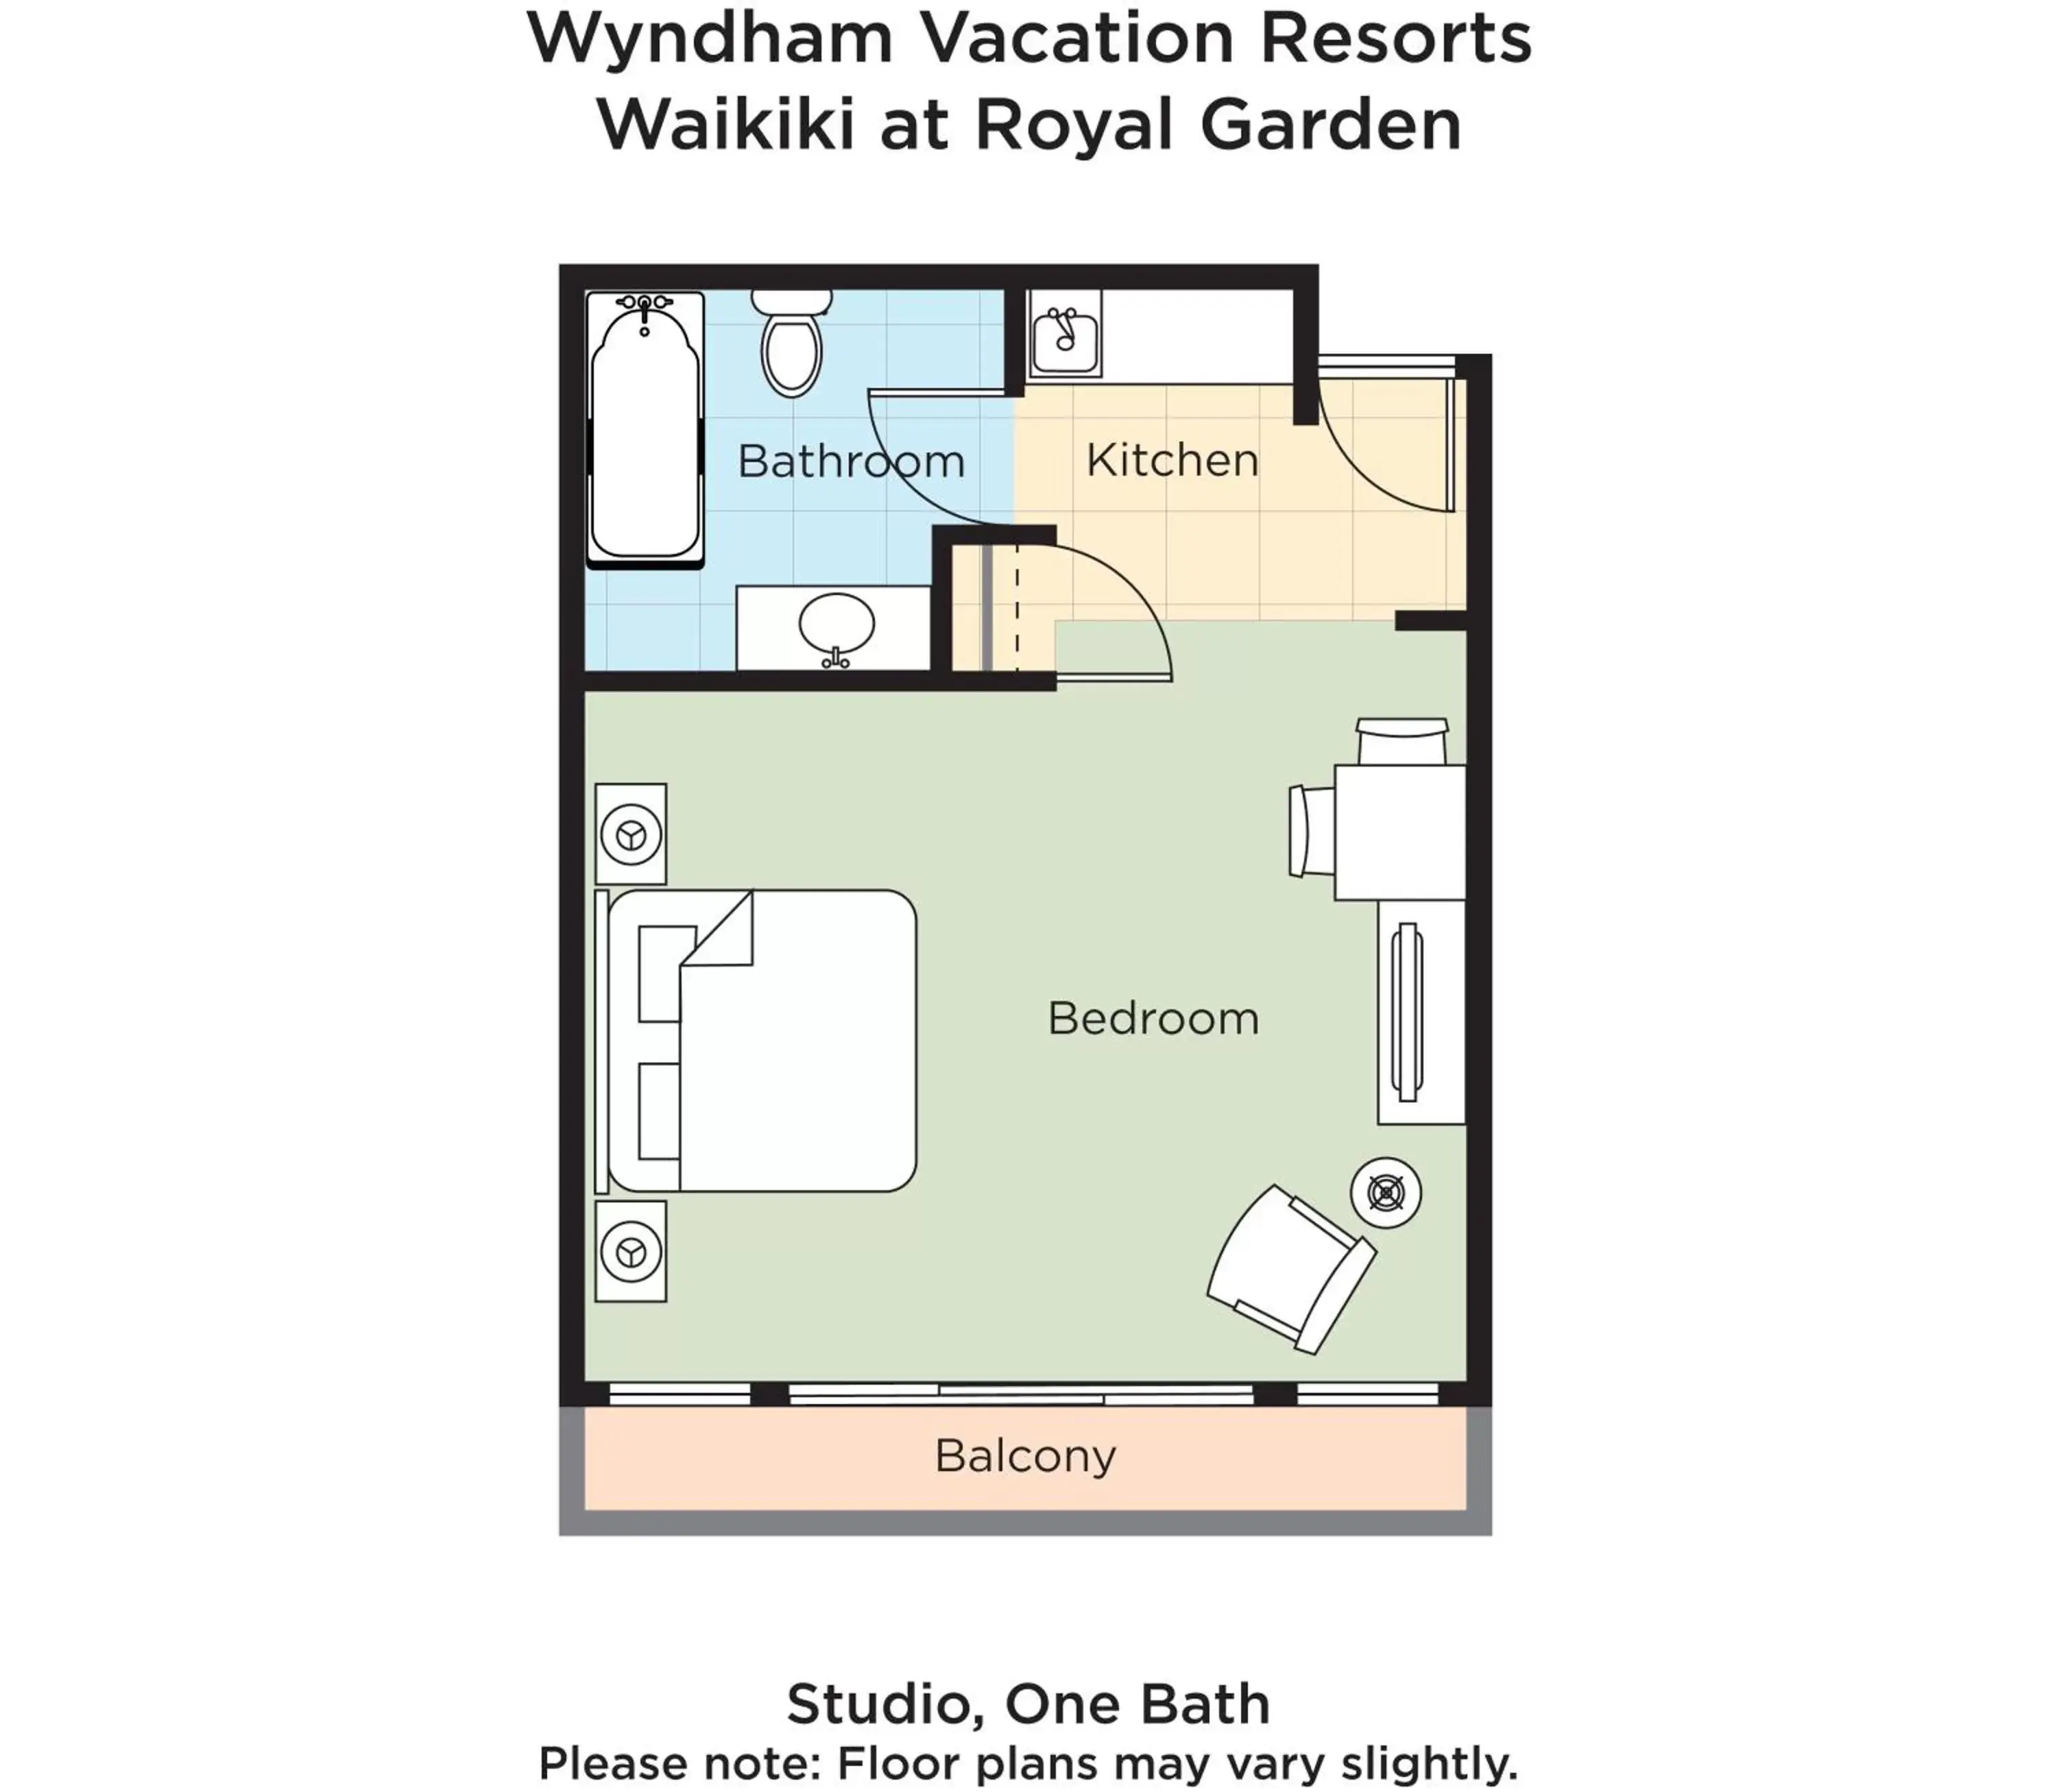 Floor Plan in Wyndham Vacation Resorts Royal Garden at Waikiki